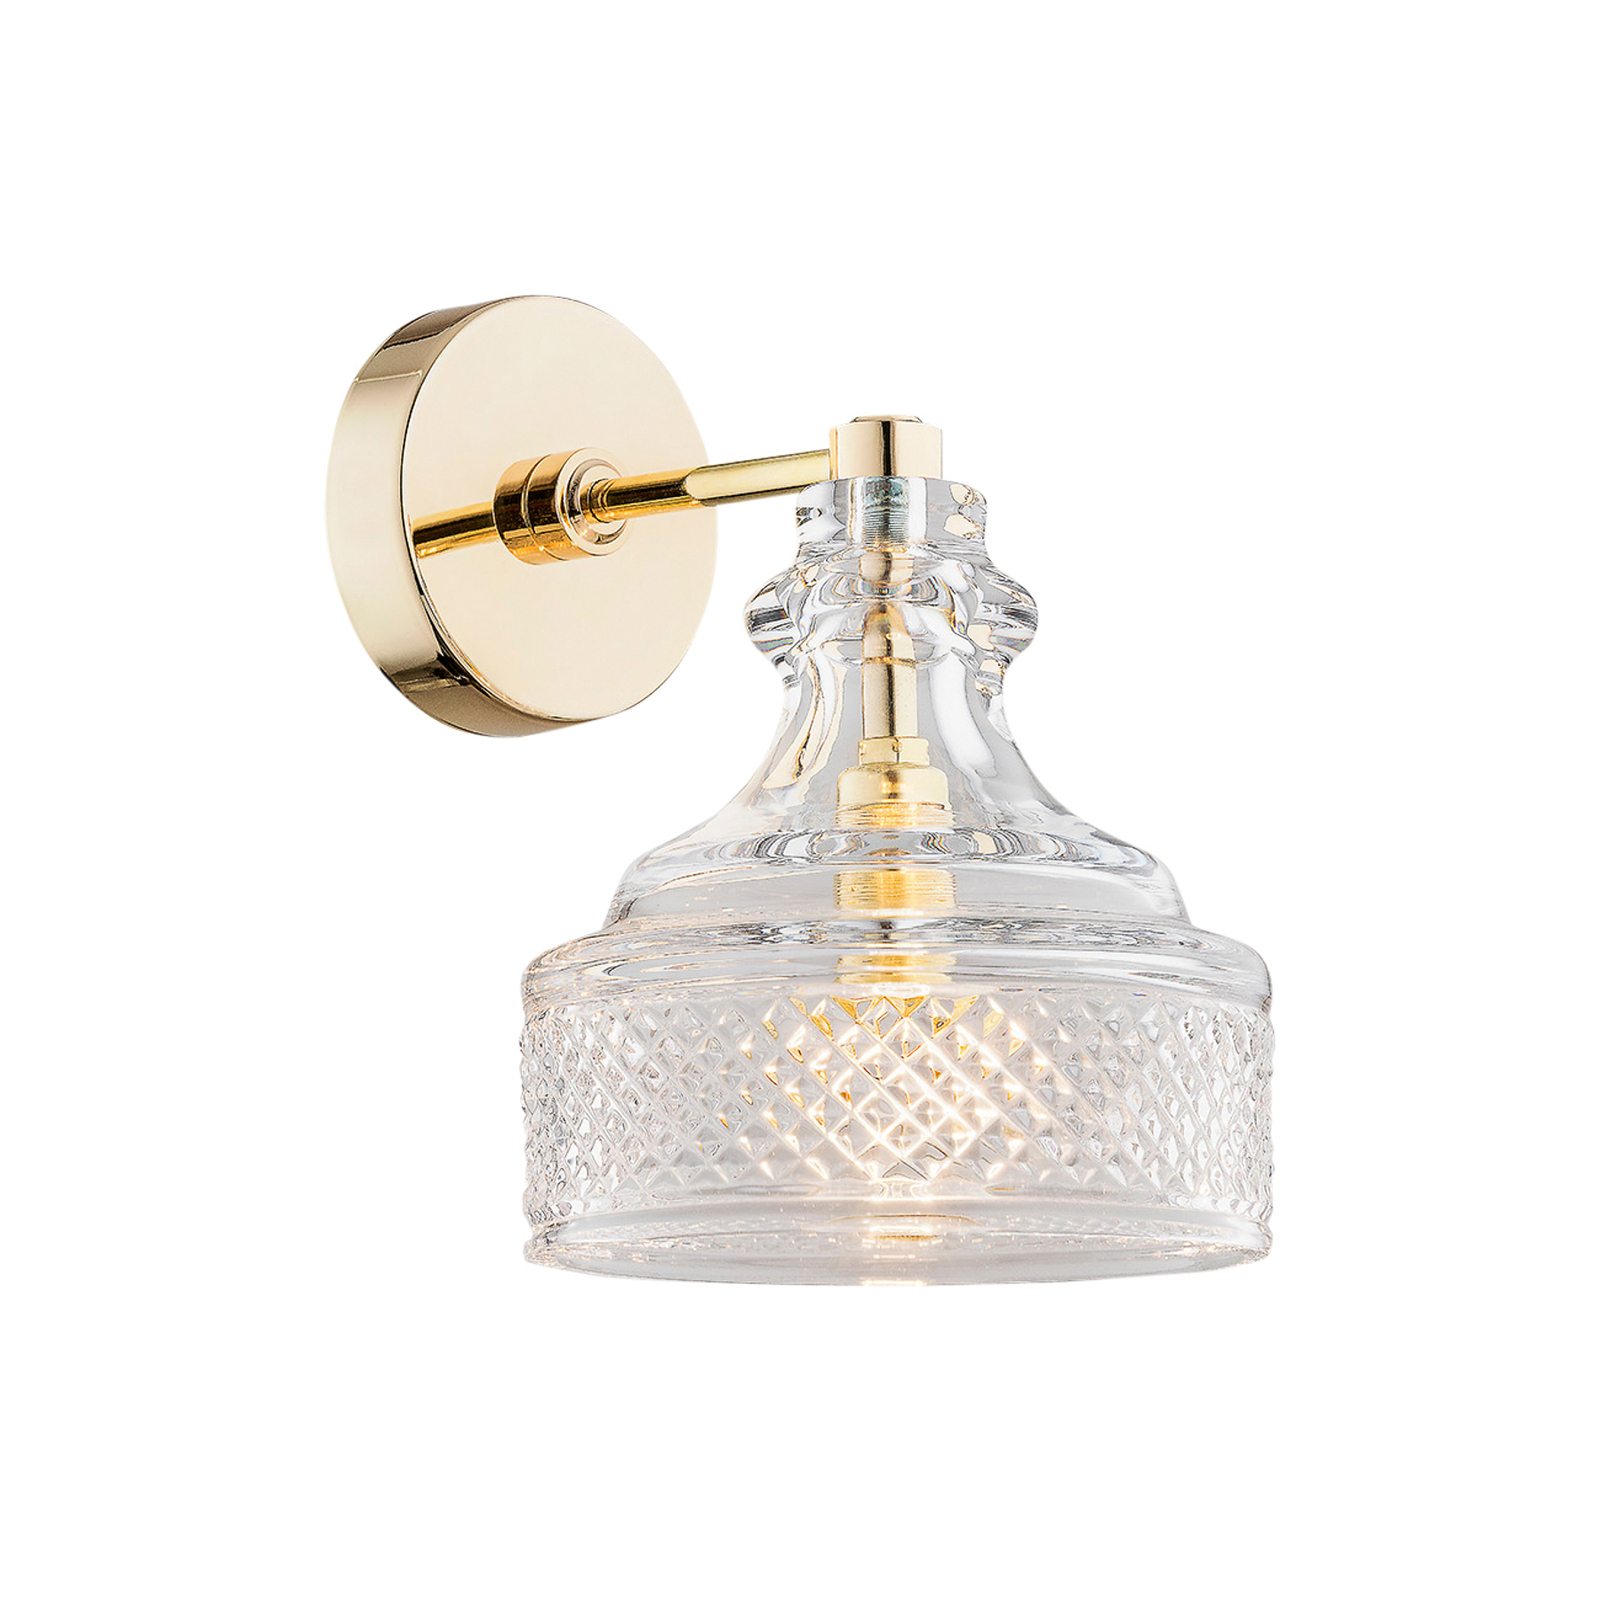 Crosby wall light, beautiful glass lampshade